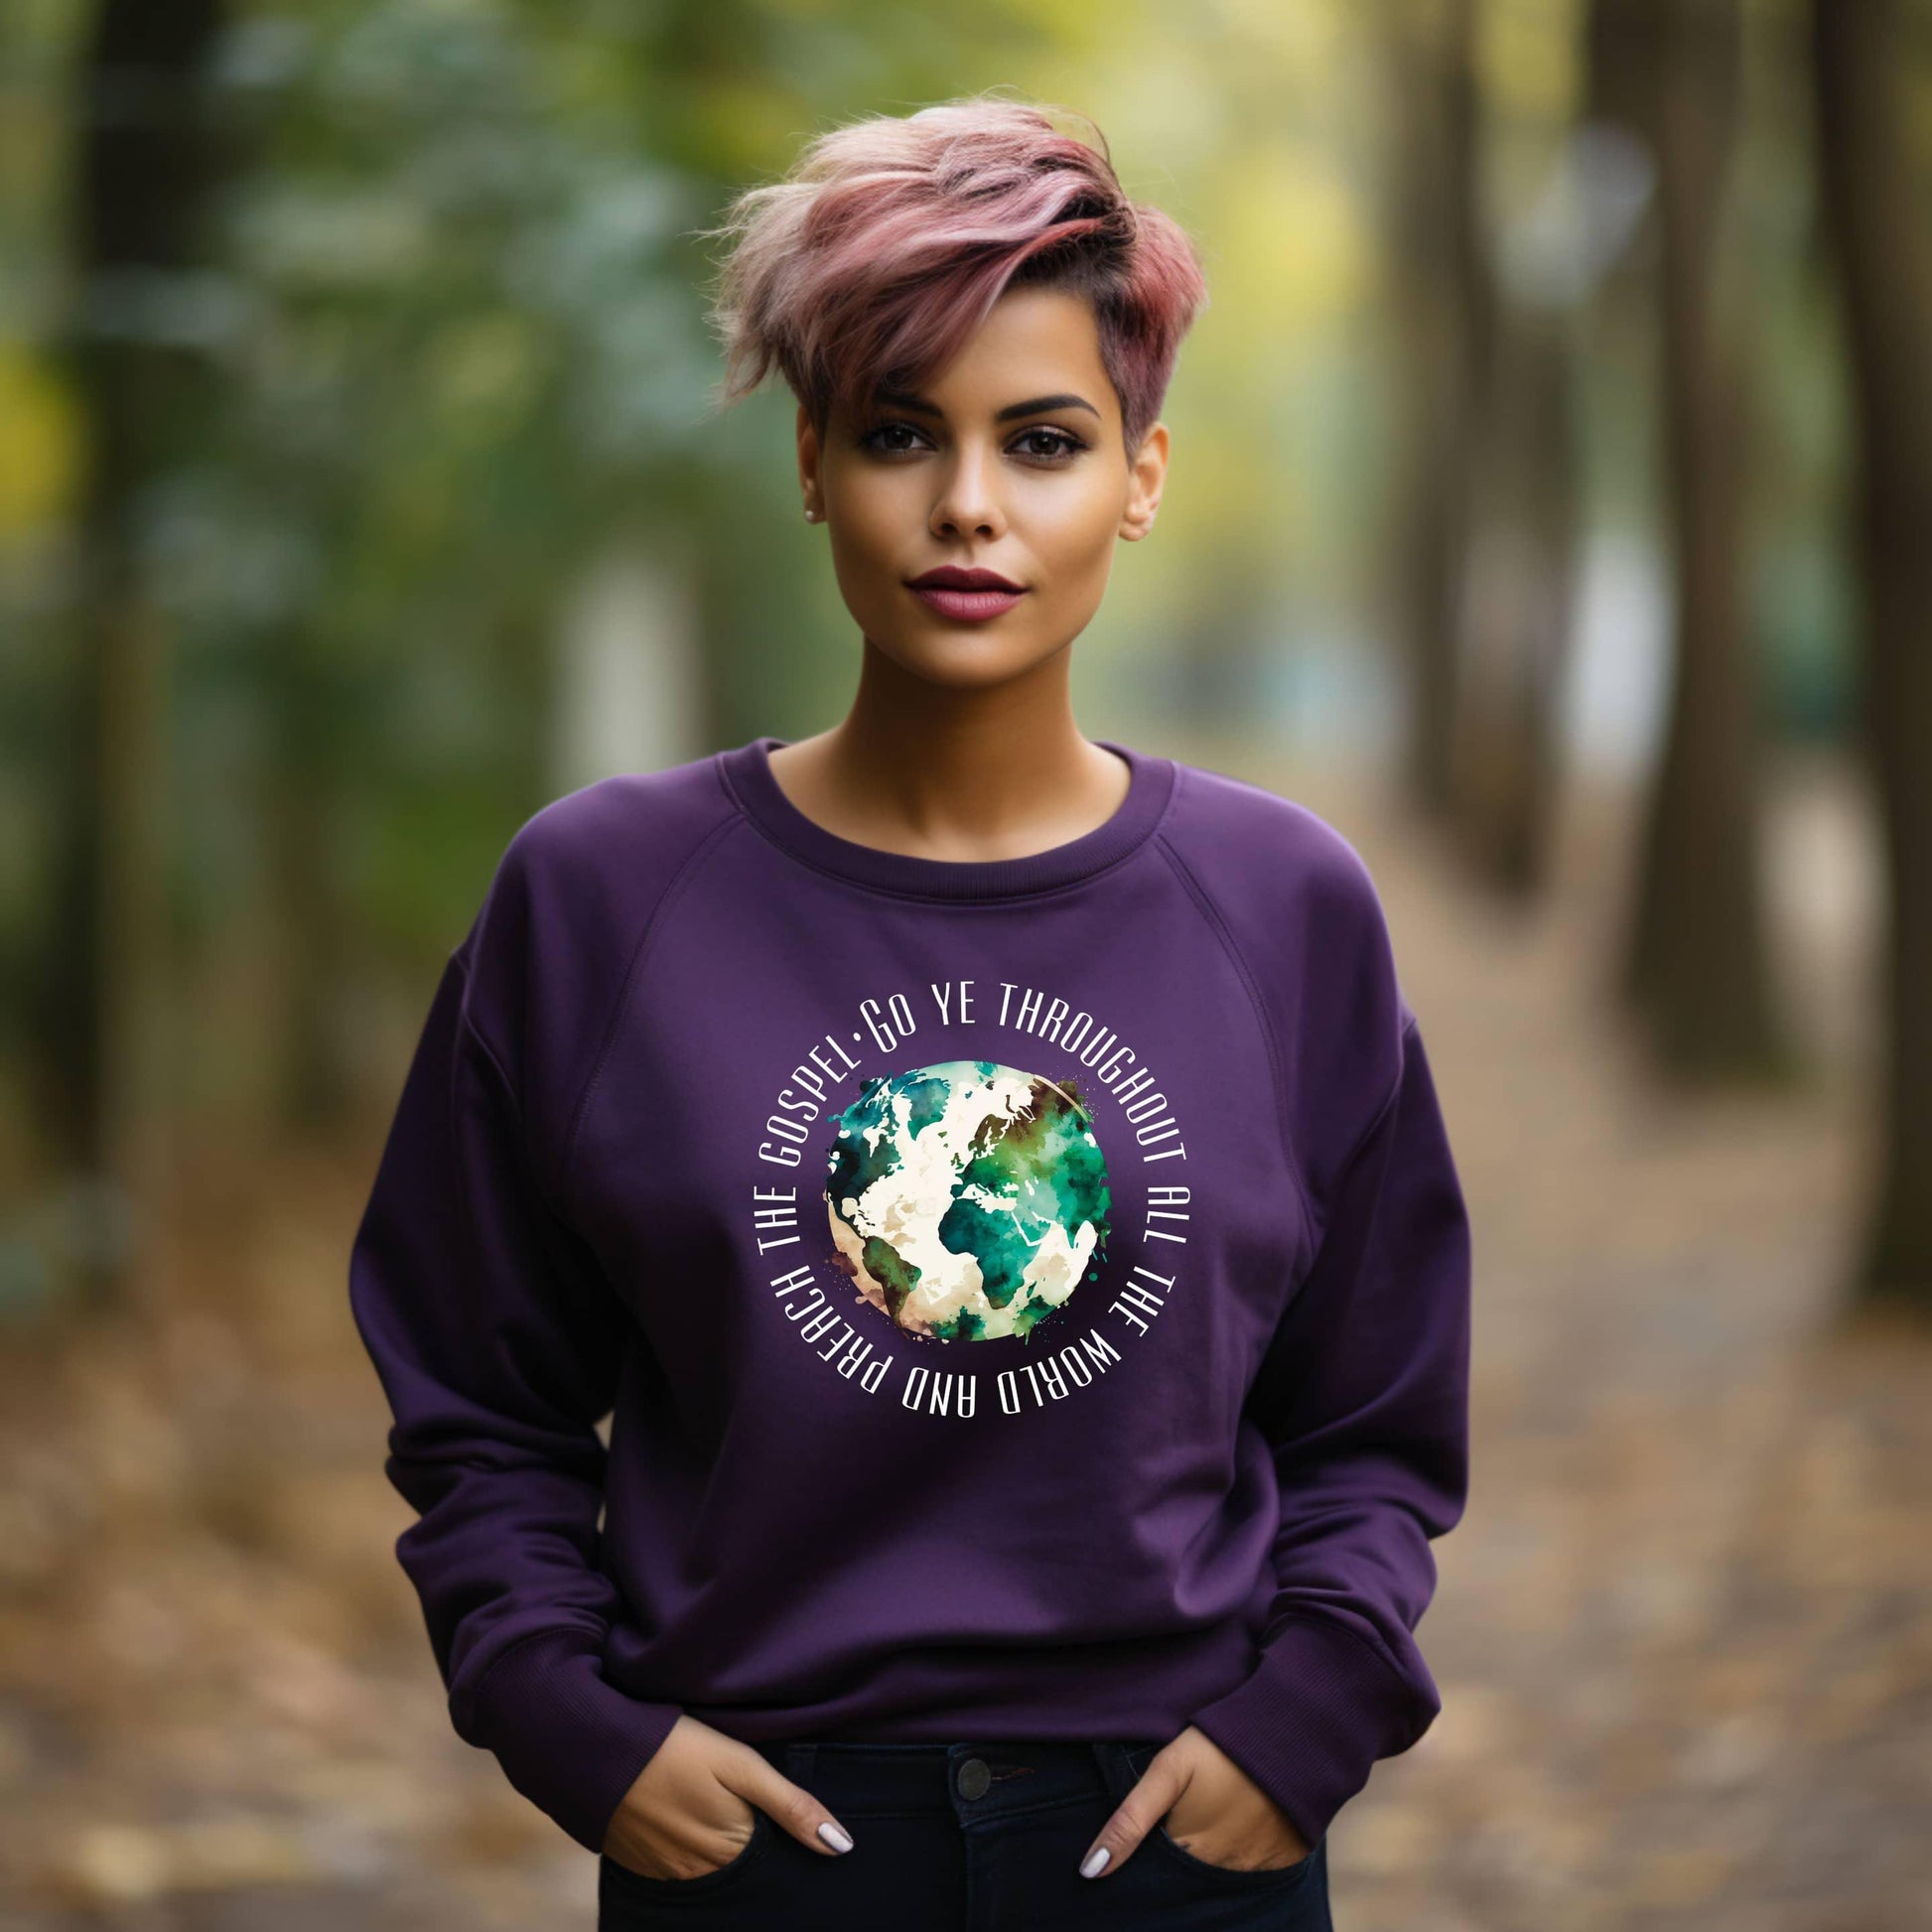 Go Ye Throughout The World And Preach Women’s Sweatshirt - JT Footprint Apparel